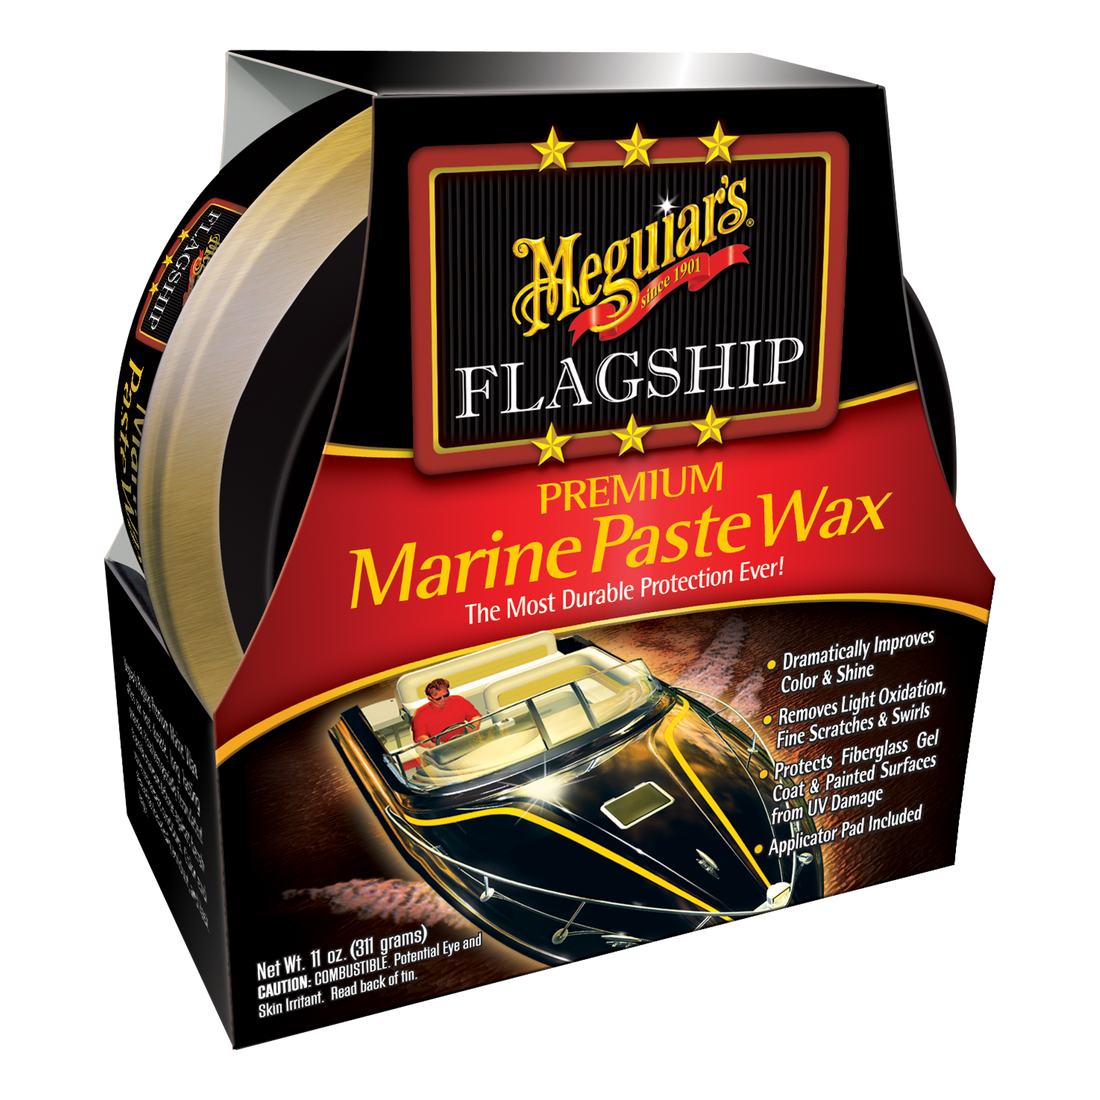 Flagship Marine Paste Wax